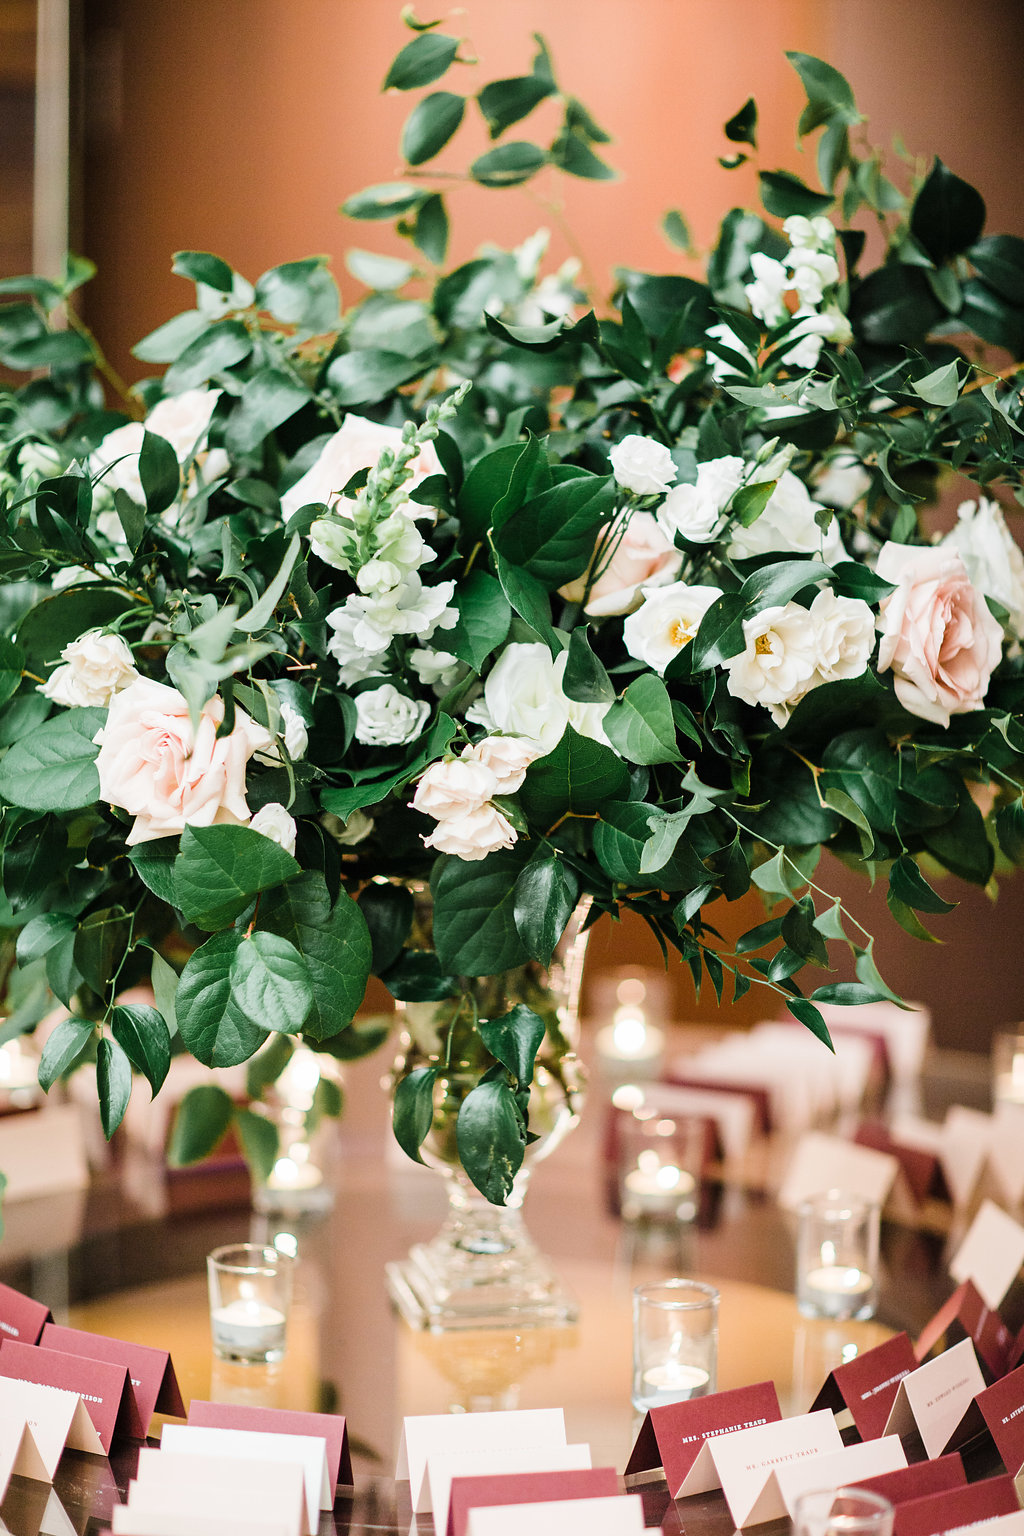 Romantic Winter Park Hyatt DC Wedding Reception, Wedding Planning by Bright Occasions, Lissa Ryan Photography